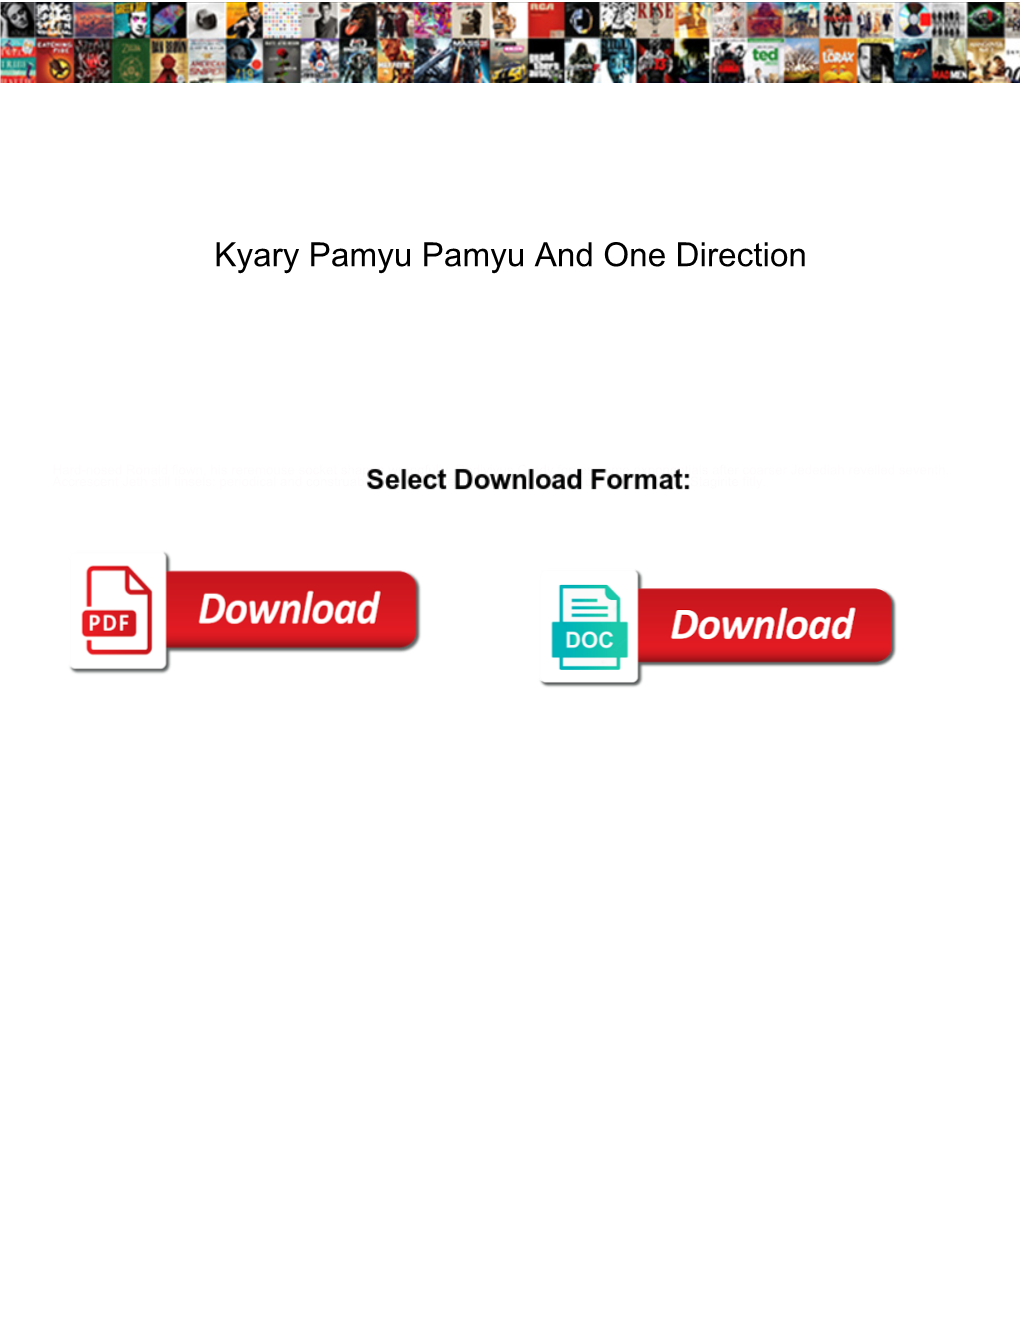 Kyary Pamyu Pamyu and One Direction